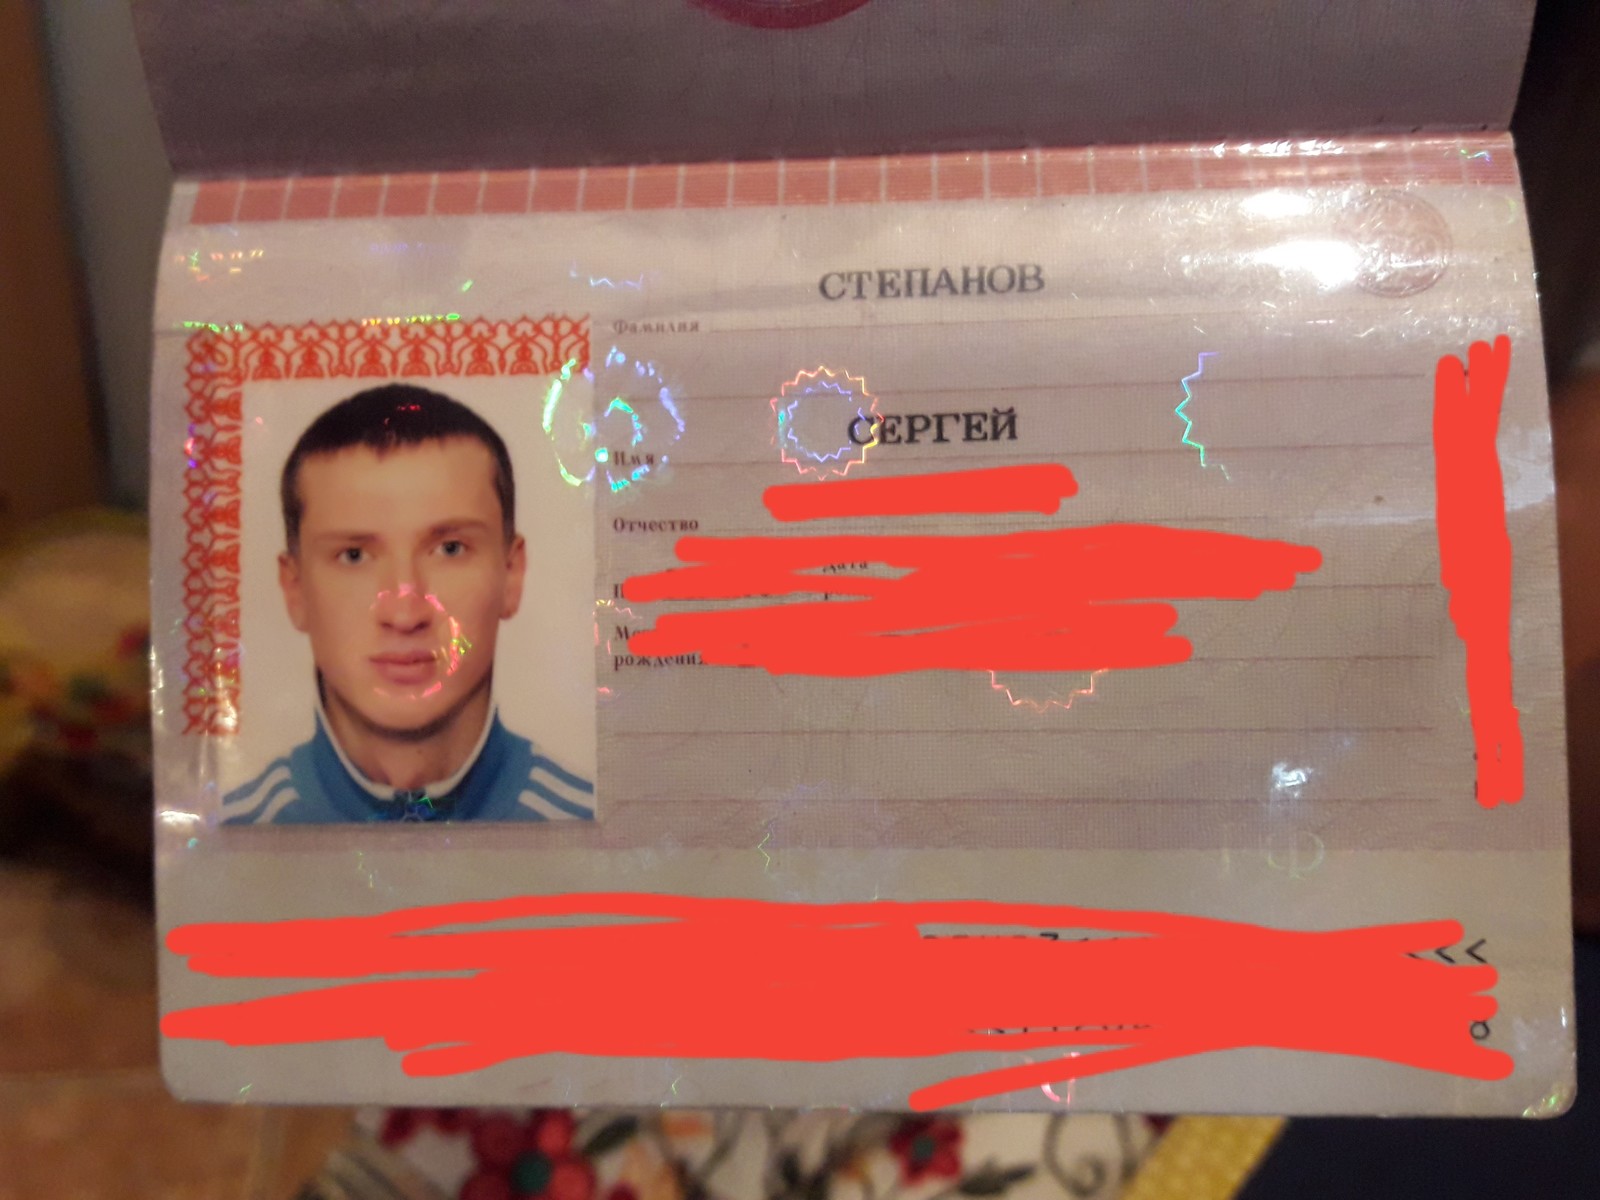 Степанов Степан паспорт